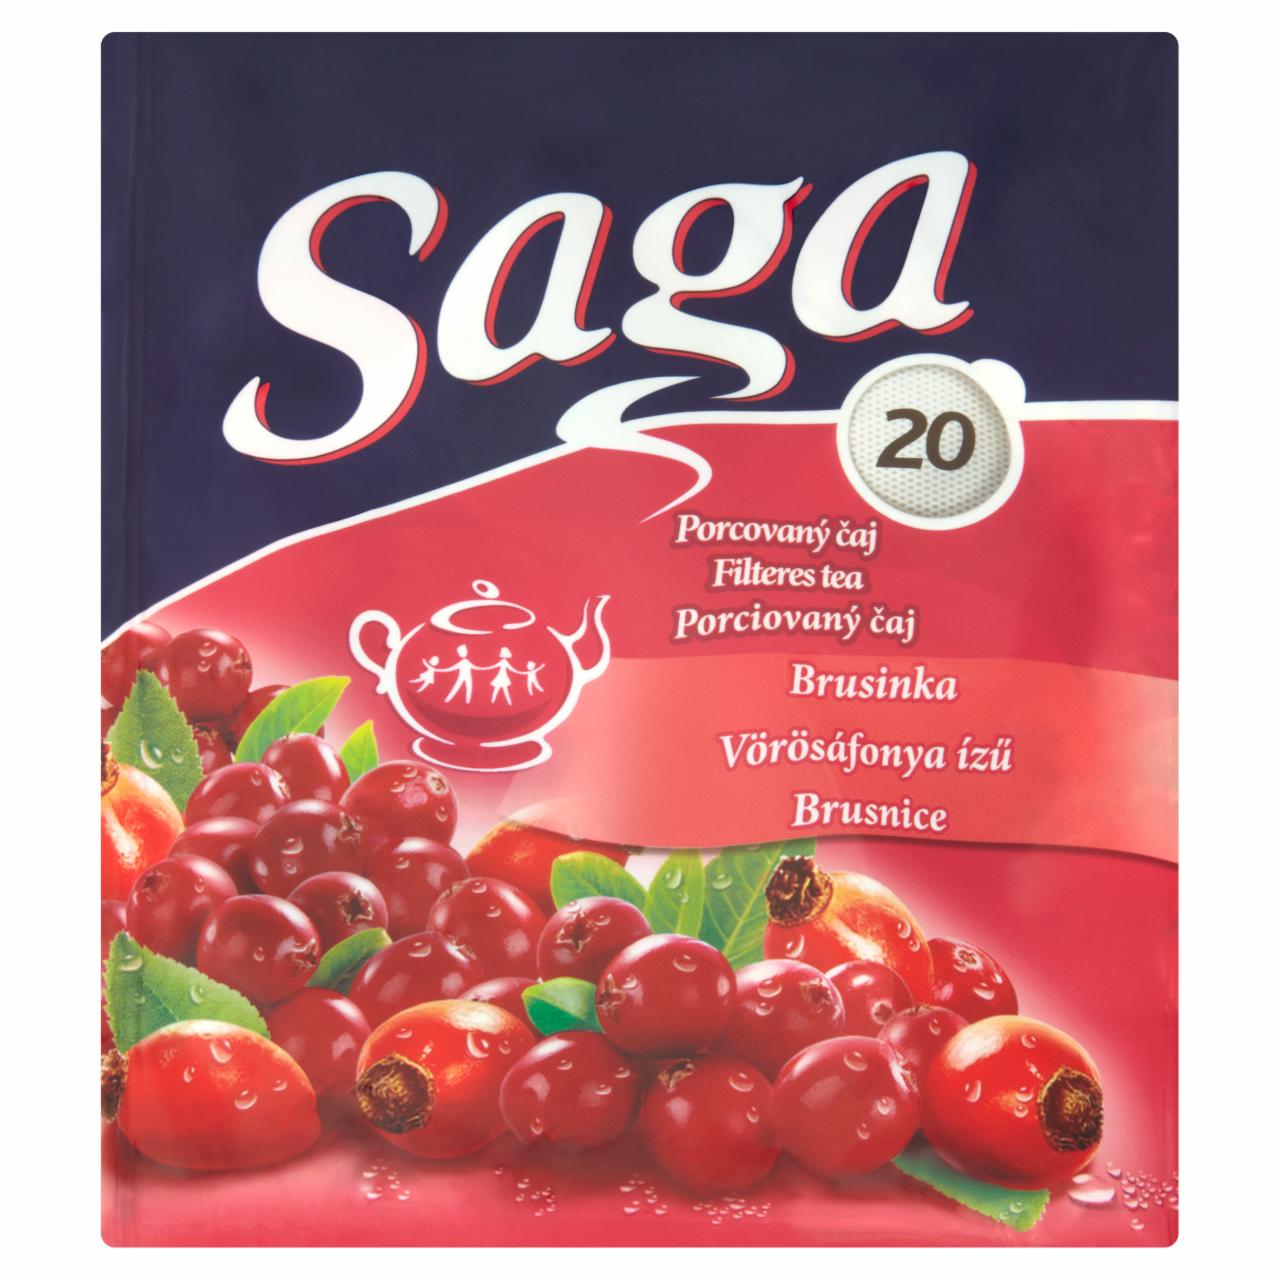 Képek - Saga vörösáfonya ízű gyümölcstea 20 filter 40 g